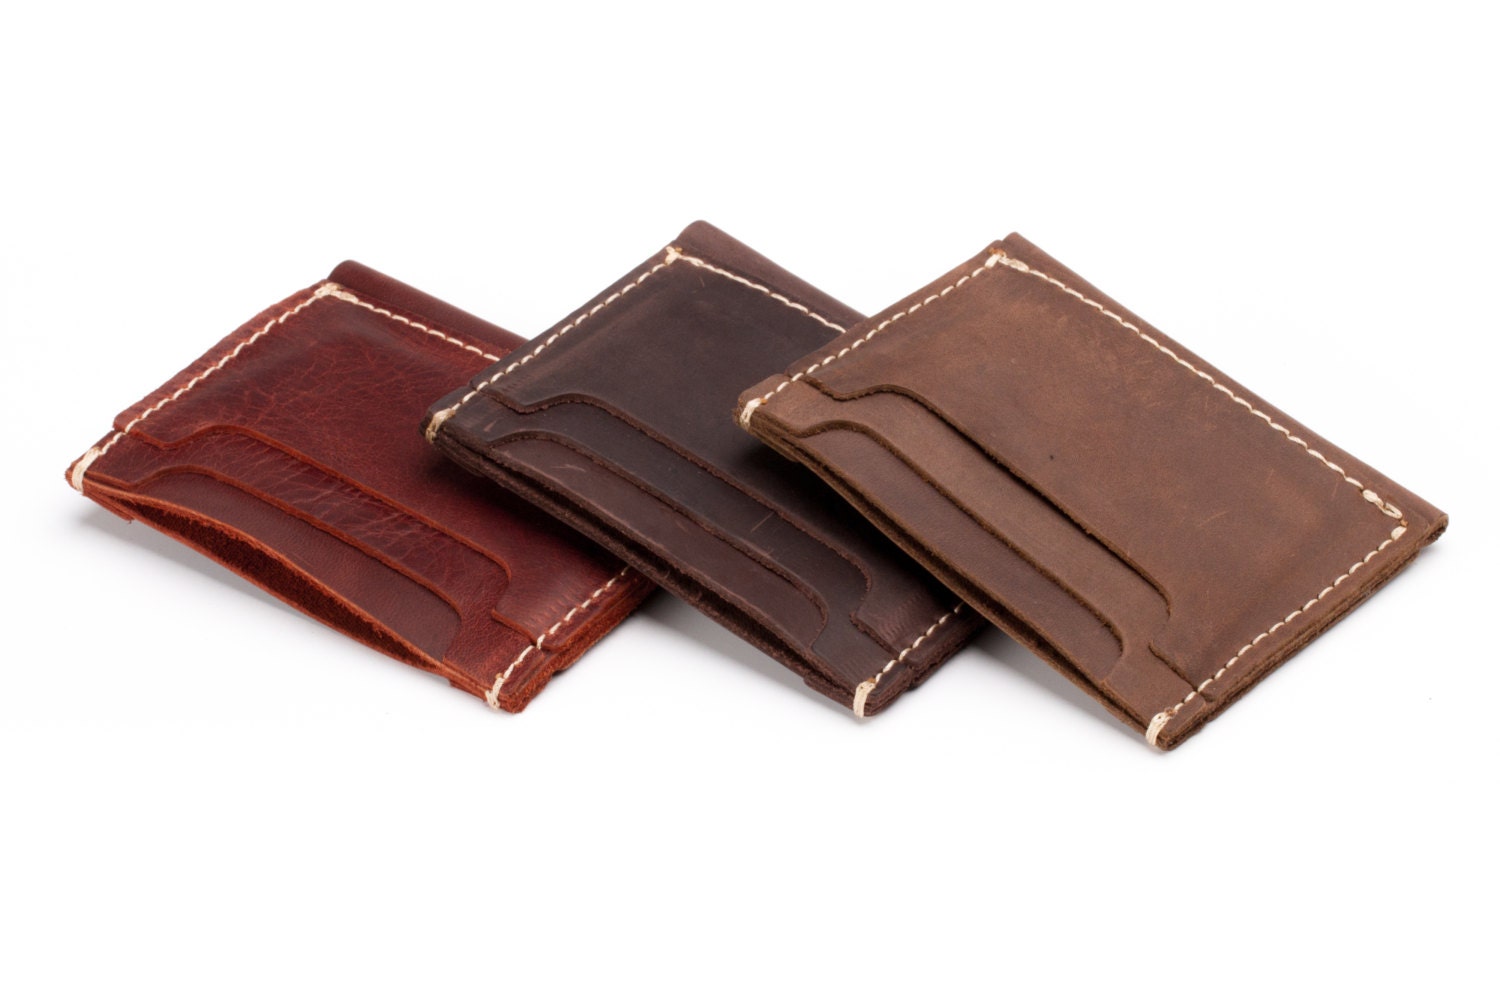 Sale - 15%, Minimalist Wallet Leather- Gifts for Men, Groomsmen Gifts, Front Pocket Wallet, Handmade Leather Wallet, Mens Credit Card Wallet